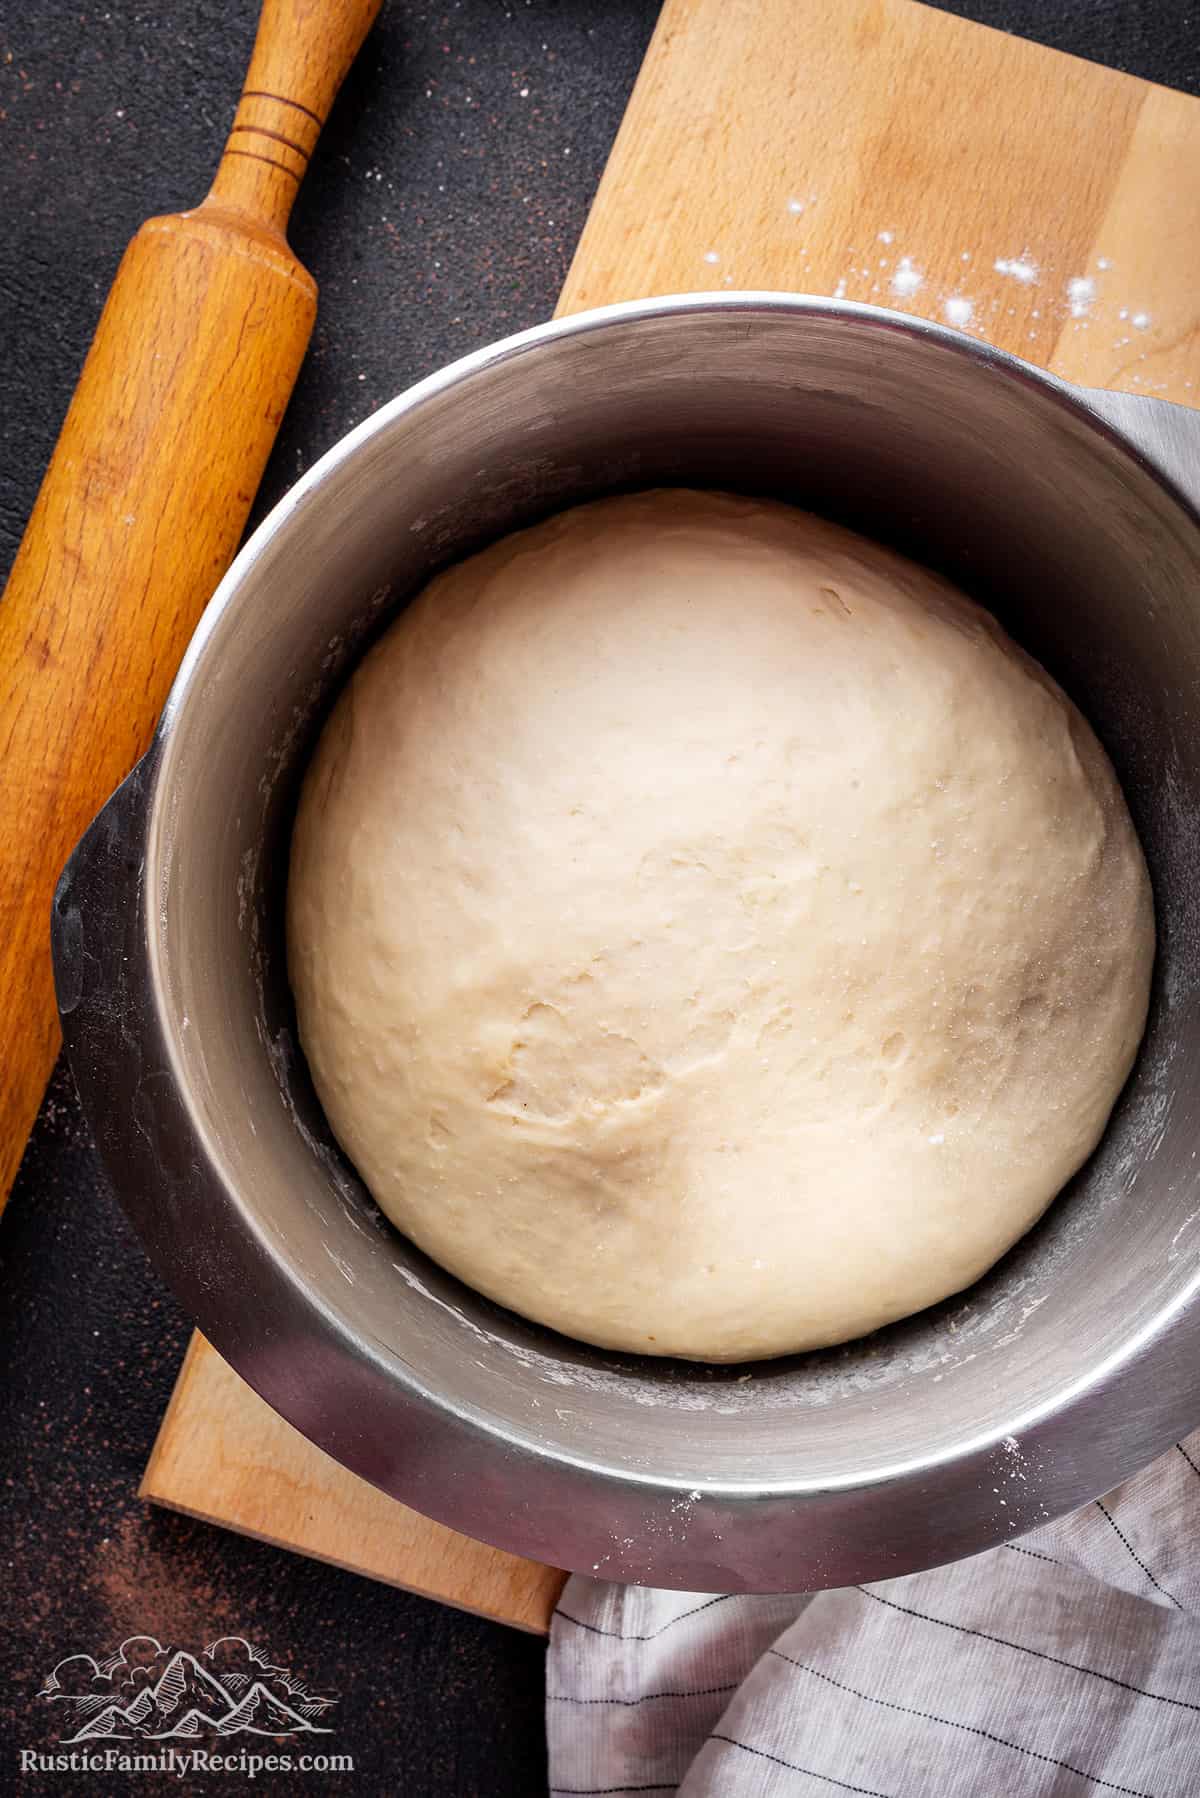 Risen dough for senorita bread